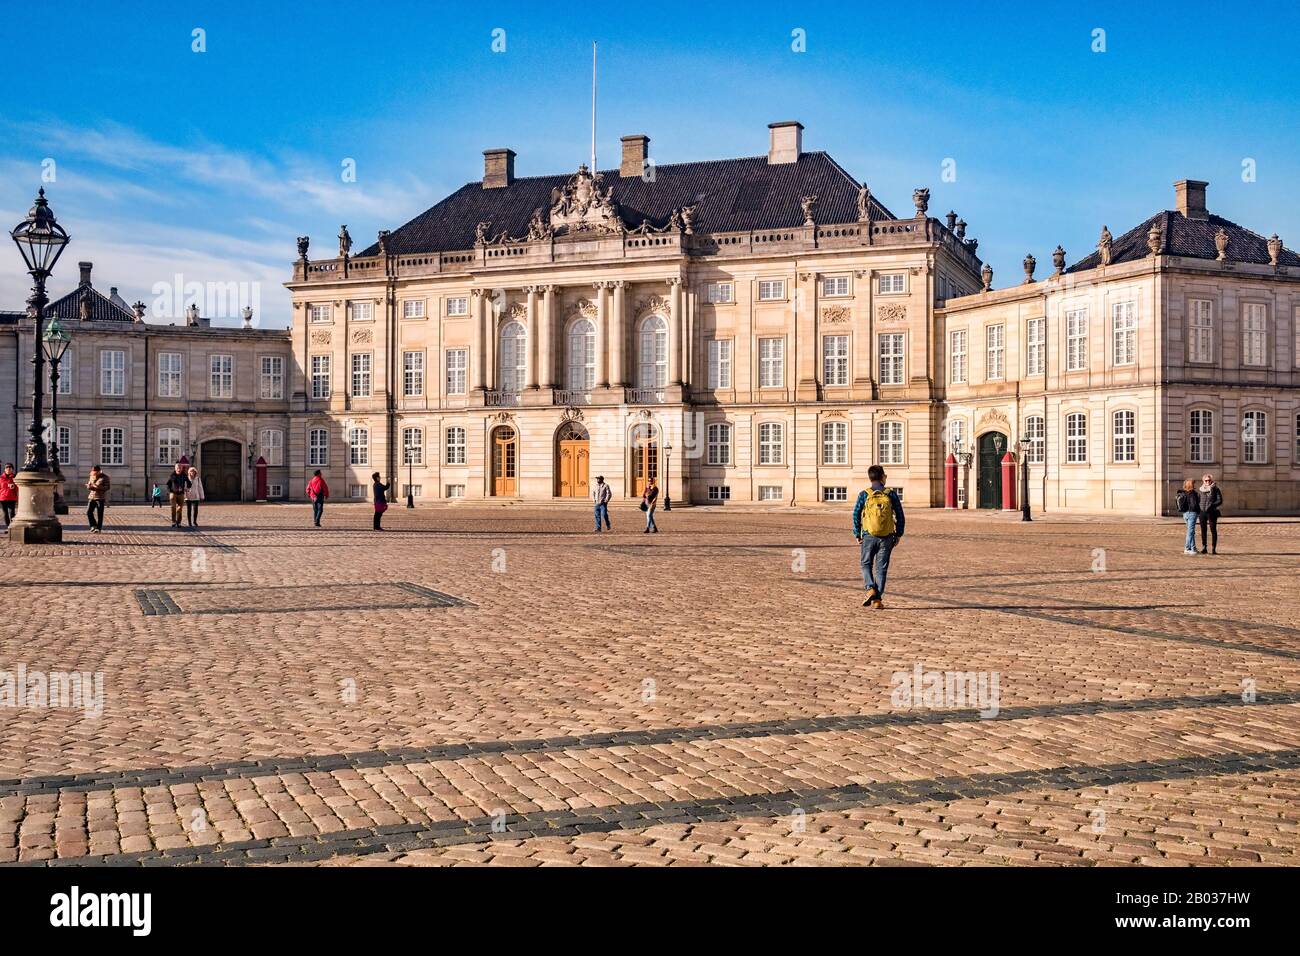 23. September 2018: Kopenhagen, Dänemark - Christian VII. Palast im Amalienborger Palastkomplex, Winterresidenz der dänischen Königsfamilie. Stockfoto